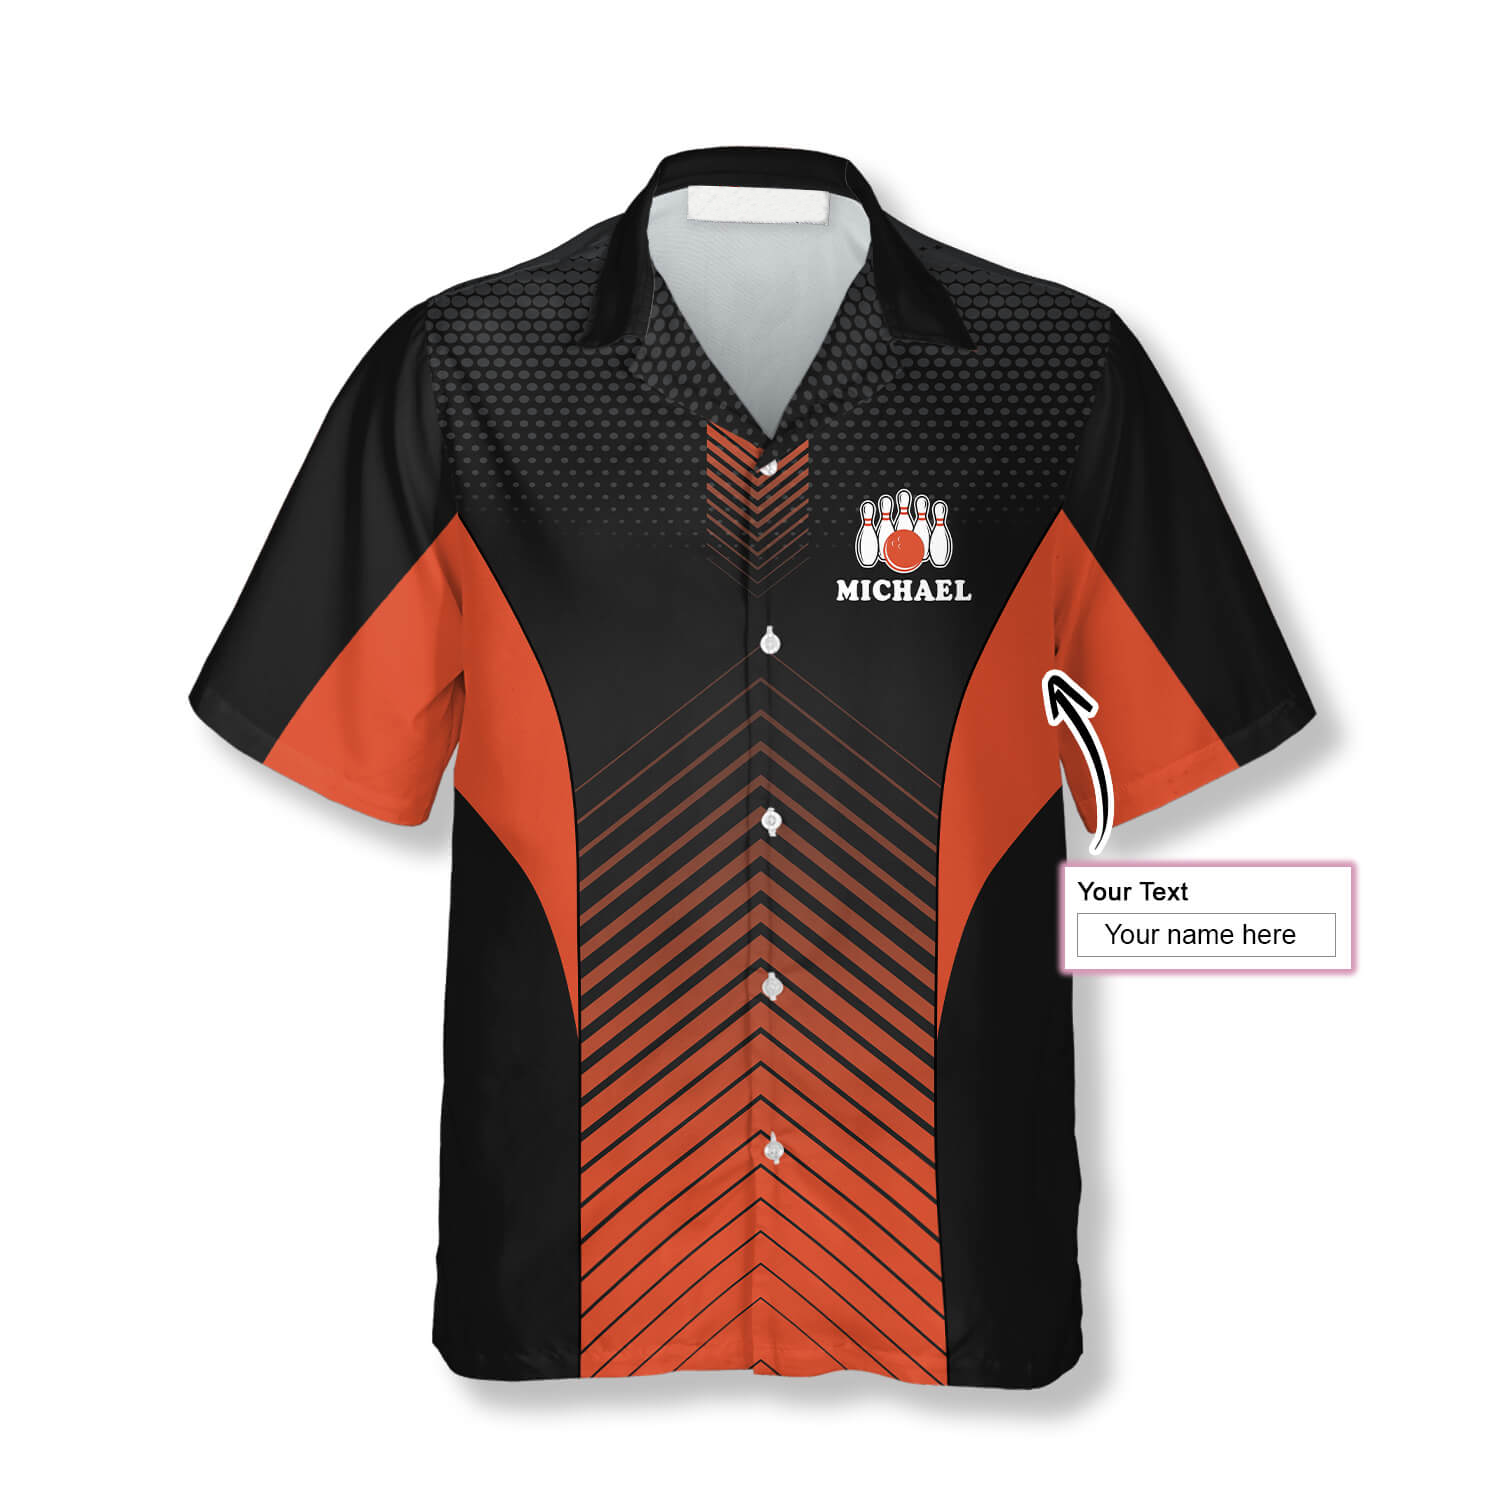 King of the Lanes Orange Custom Bowling Hawaiian Shirt/ Gift for Bowler/ Personalized Bowling 3D Shirt